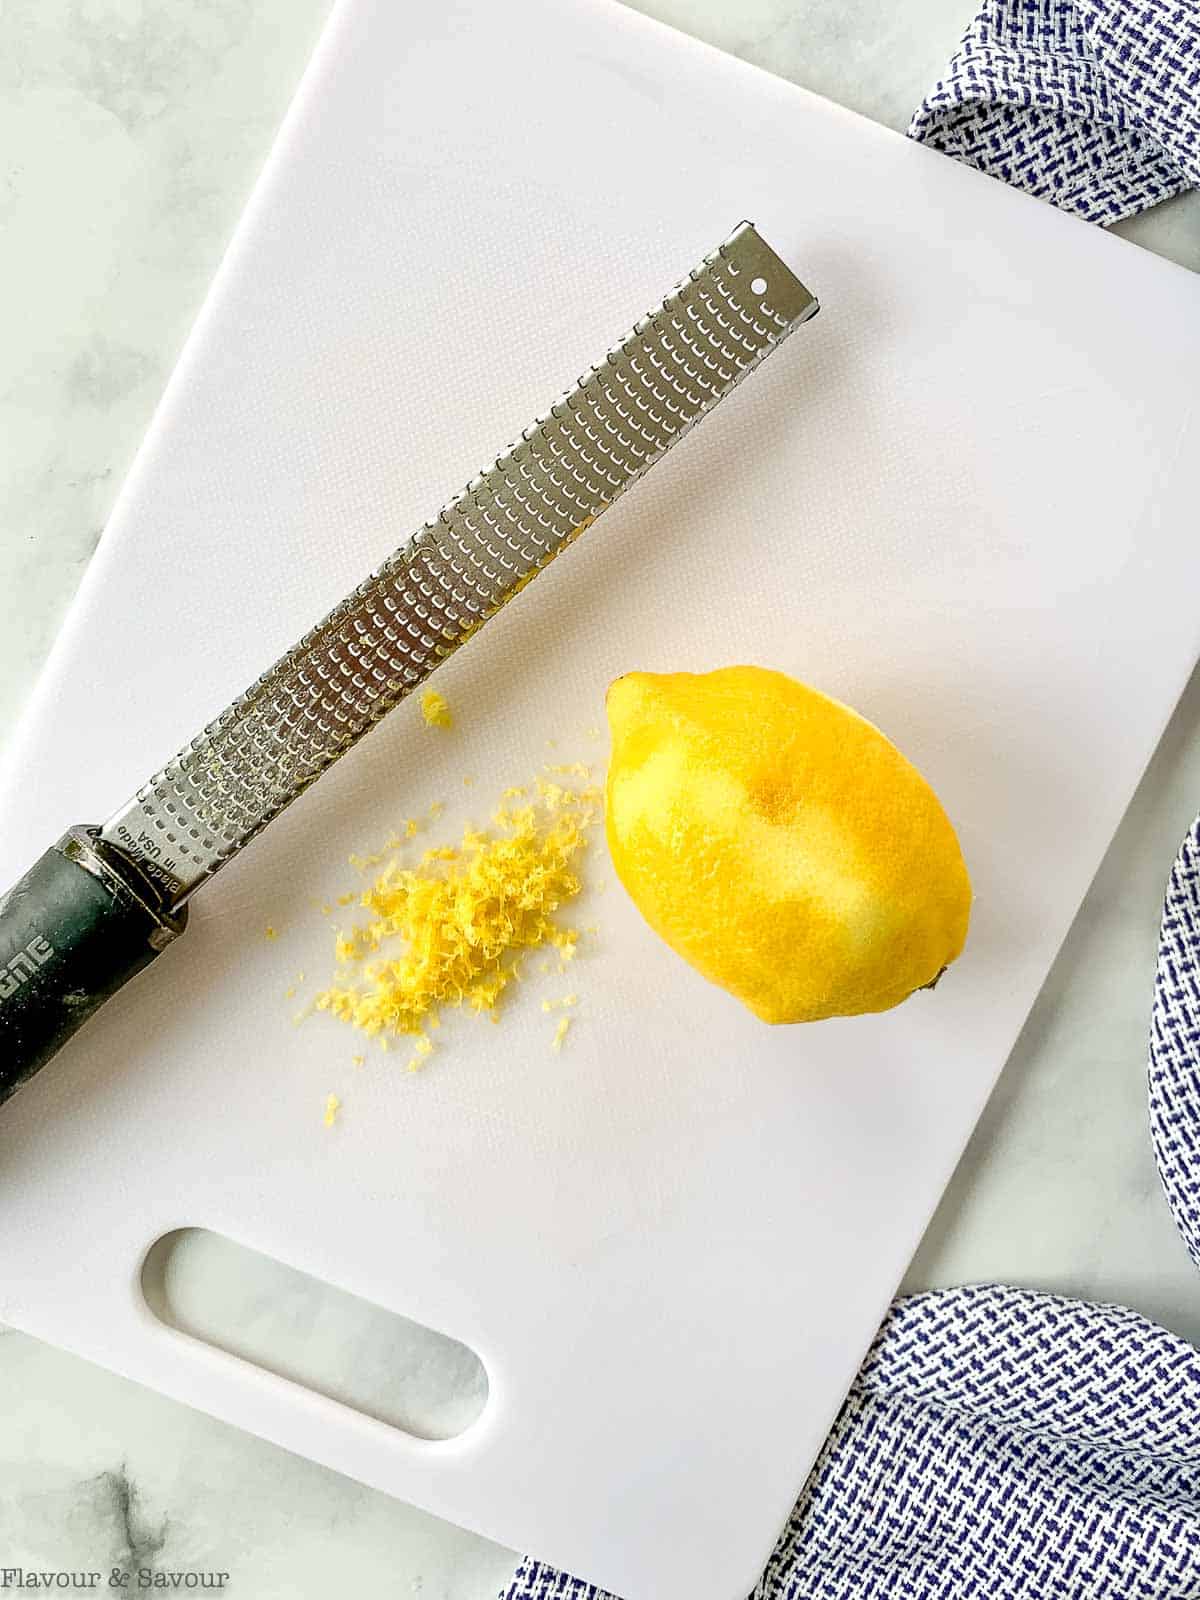 Zesting a lemon with a microplane.